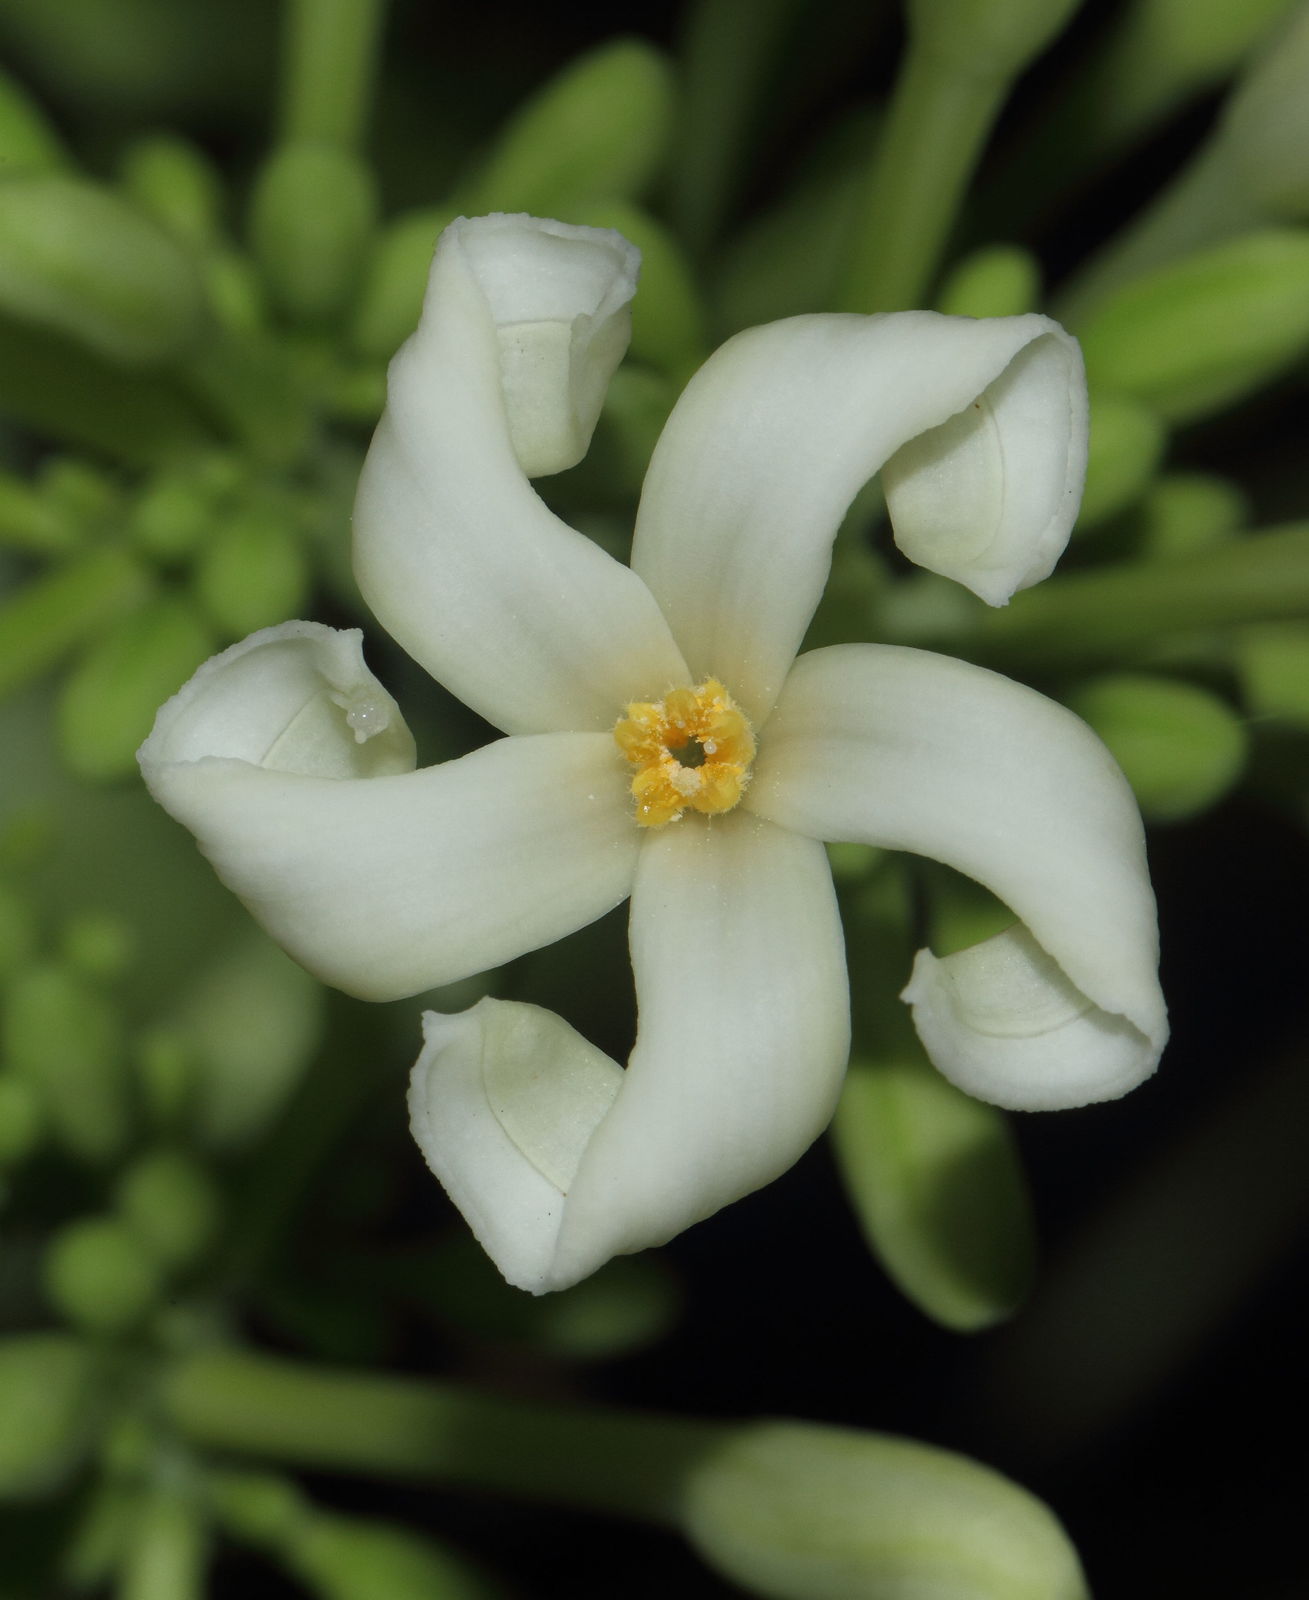 Carica papaya L. | Plants of the World Online | Kew Science